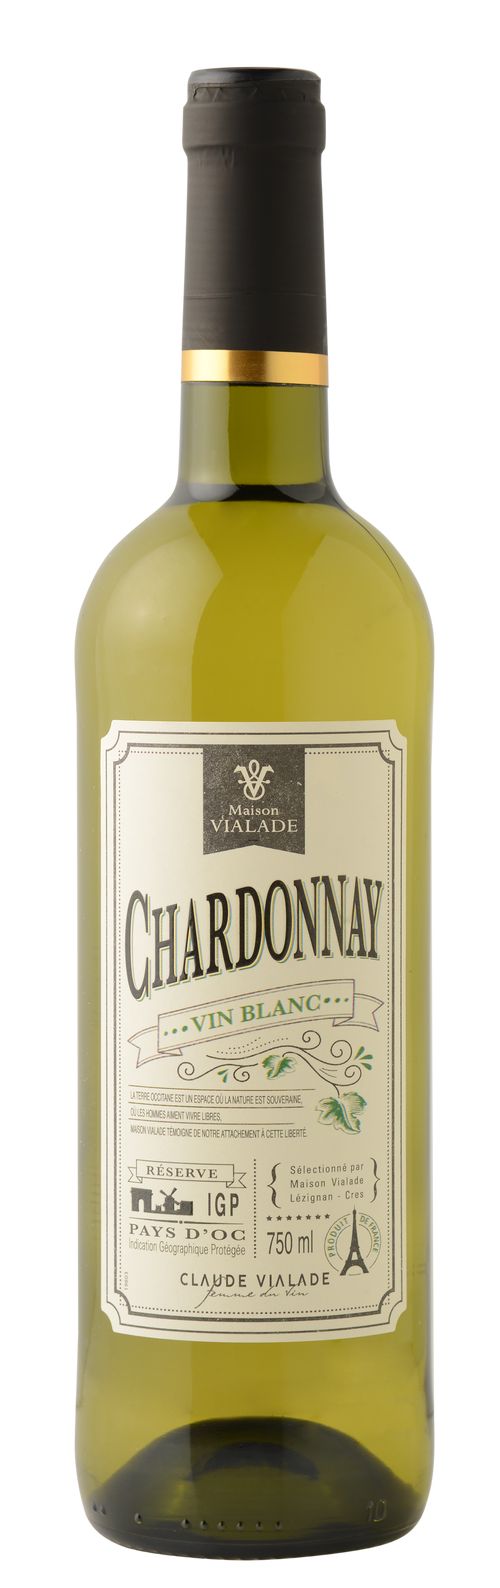 Chardonnay, Family Vintage IGP